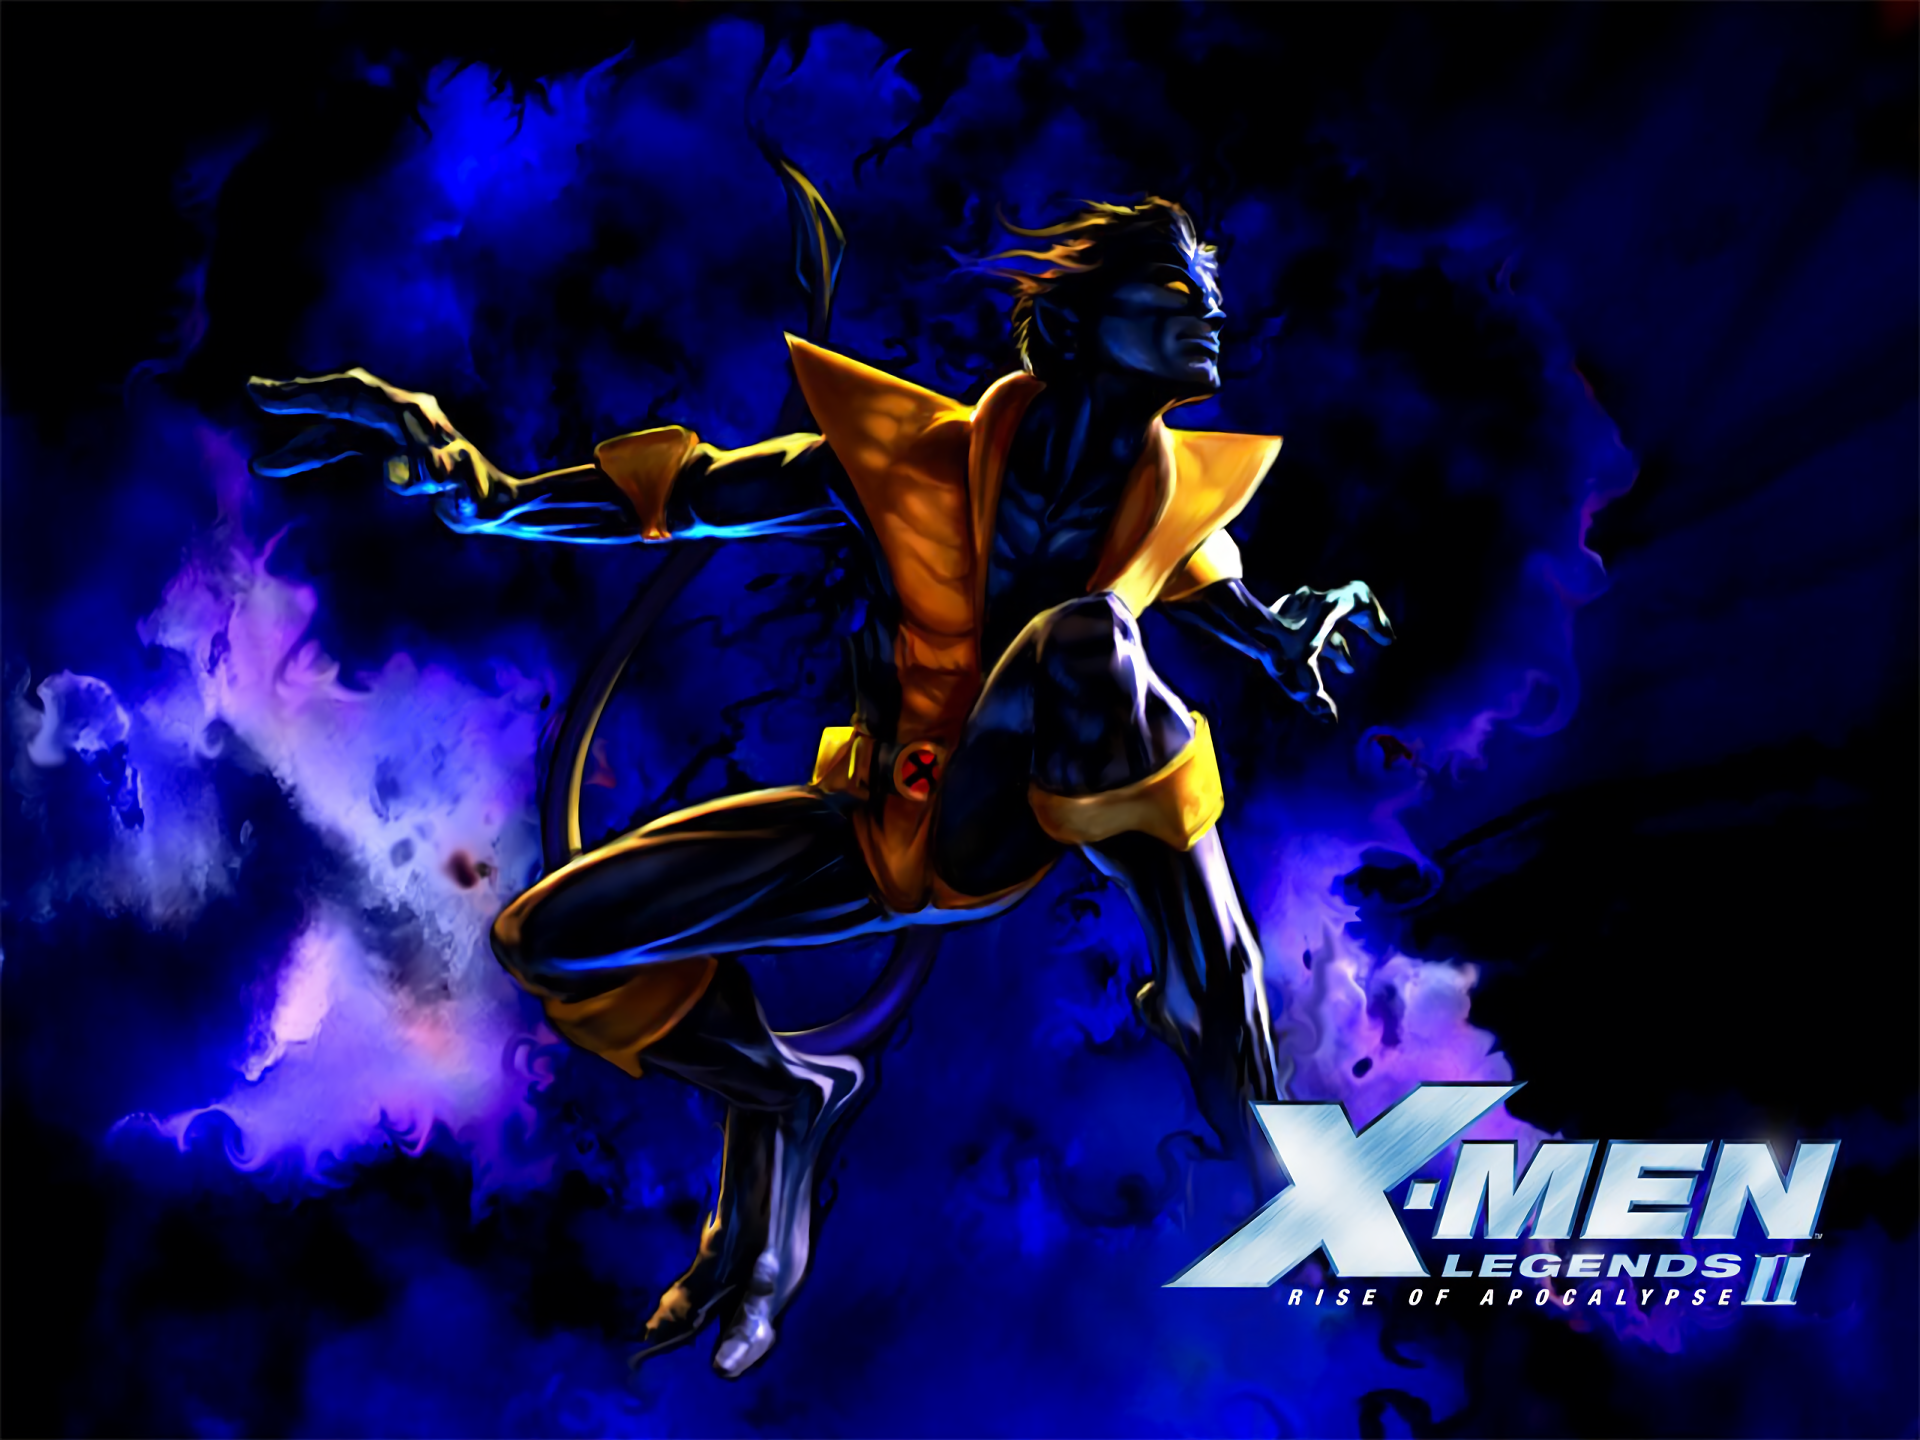 X-Men Legends Backgrounds on Wallpapers Vista